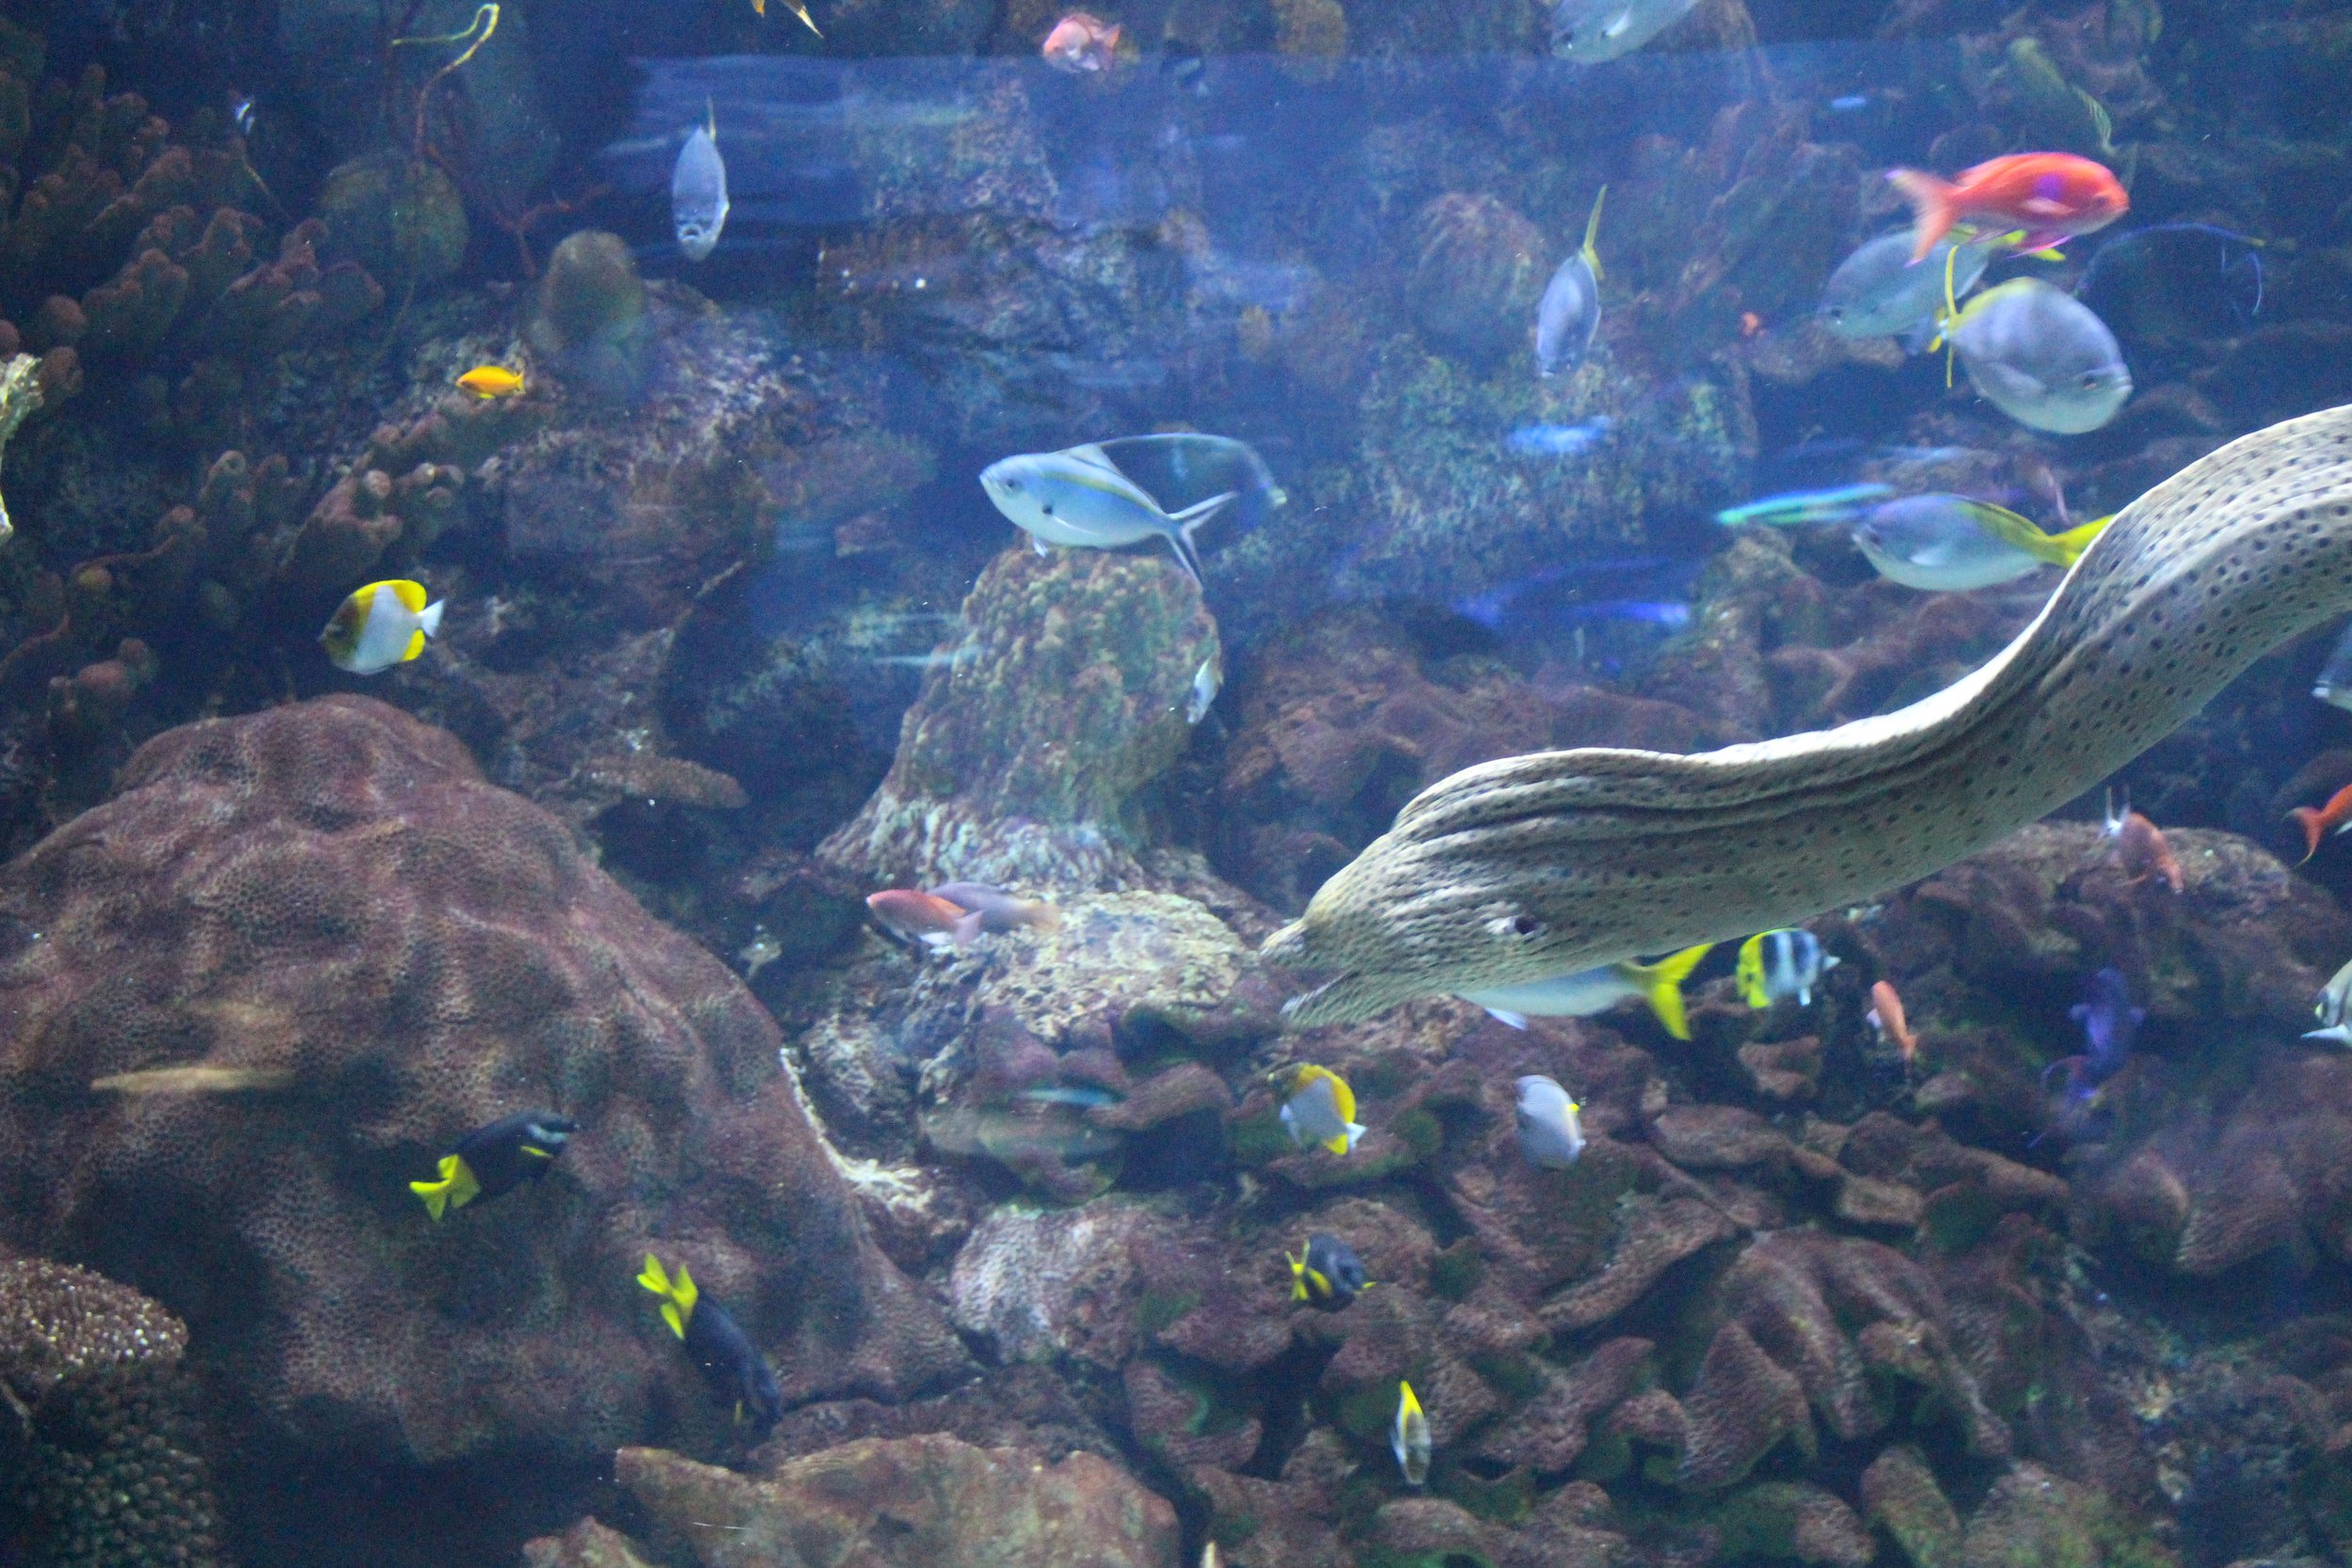  Fish swimming in a tank 